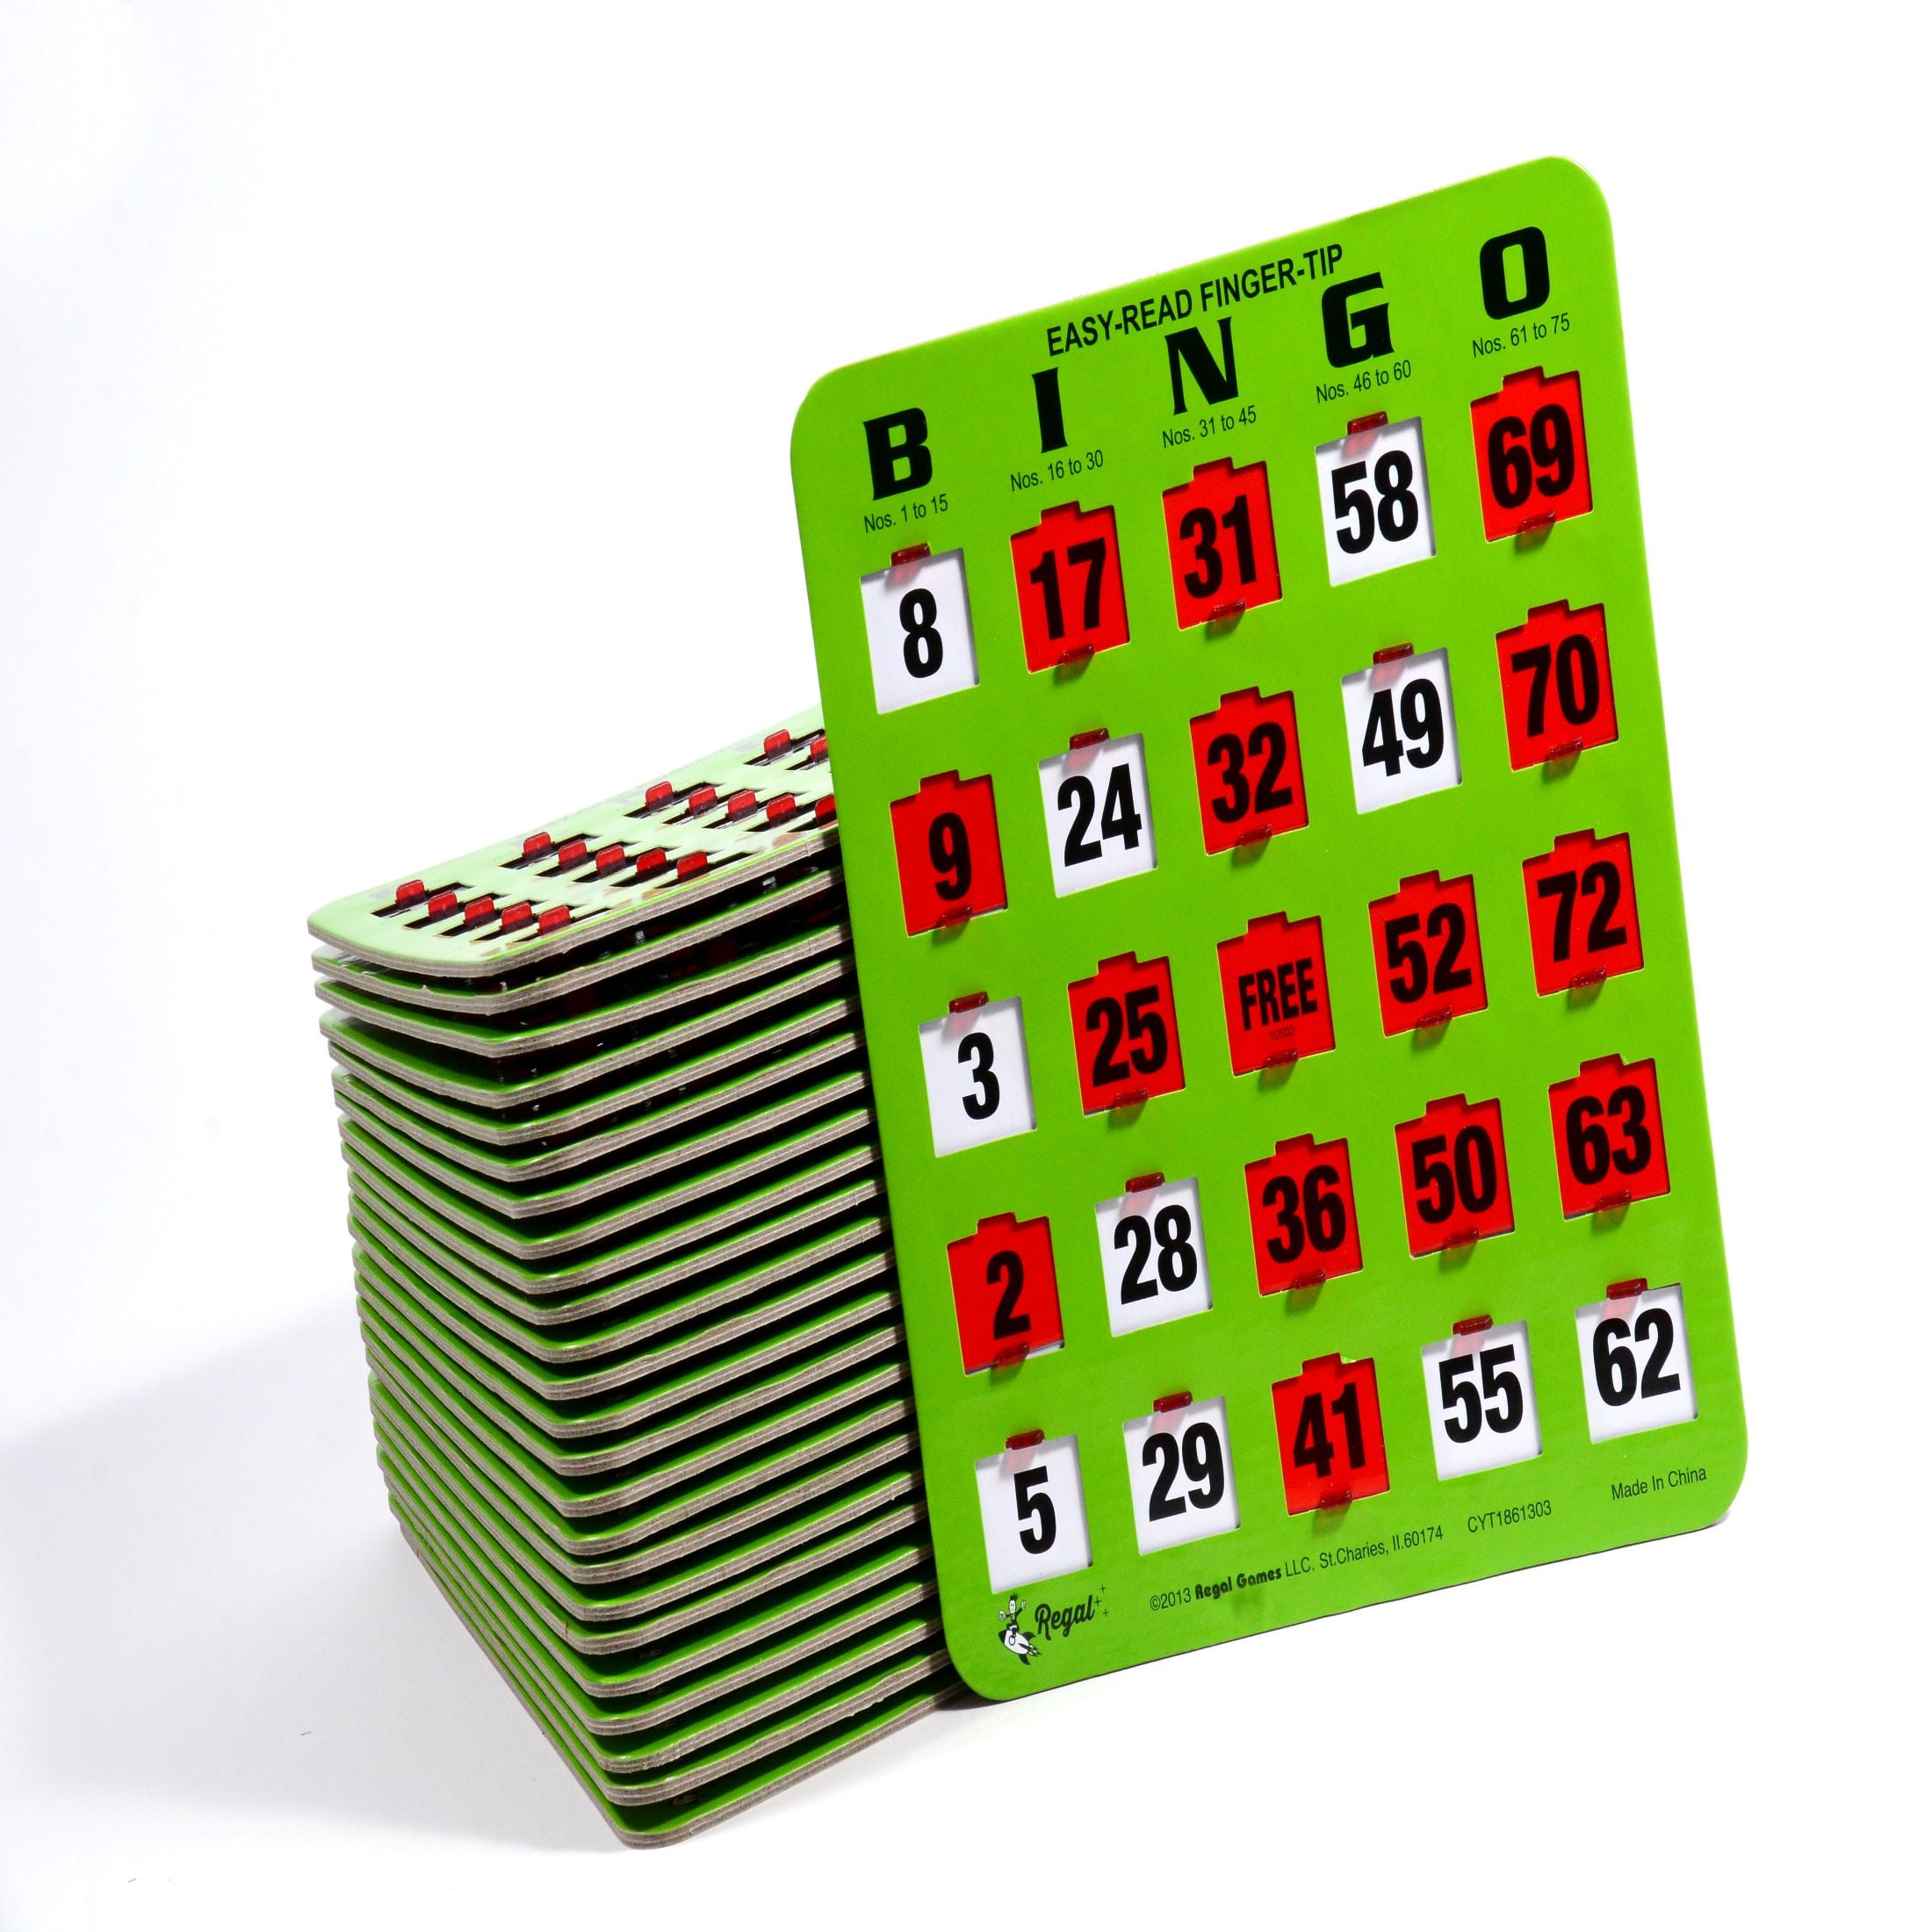 # 65-0053CGx100 100 Green Bingo Easy Read Jumbo Shutter Slide 8" x 9" Cards 